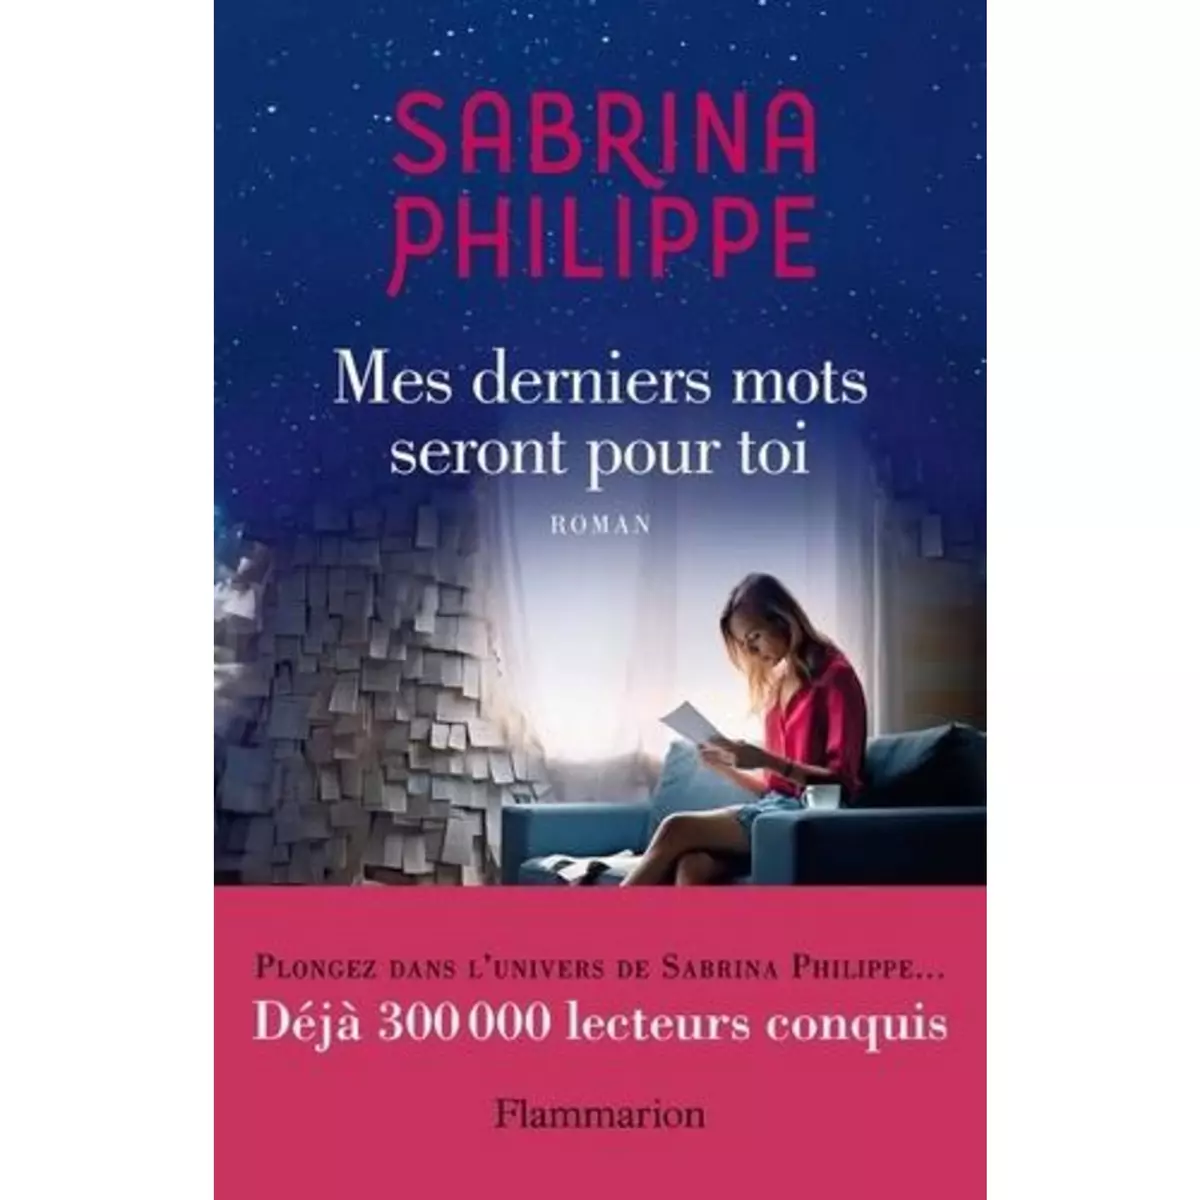  MES DERNIERS MOTS SERONT POUR TOI, Philippe Sabrina